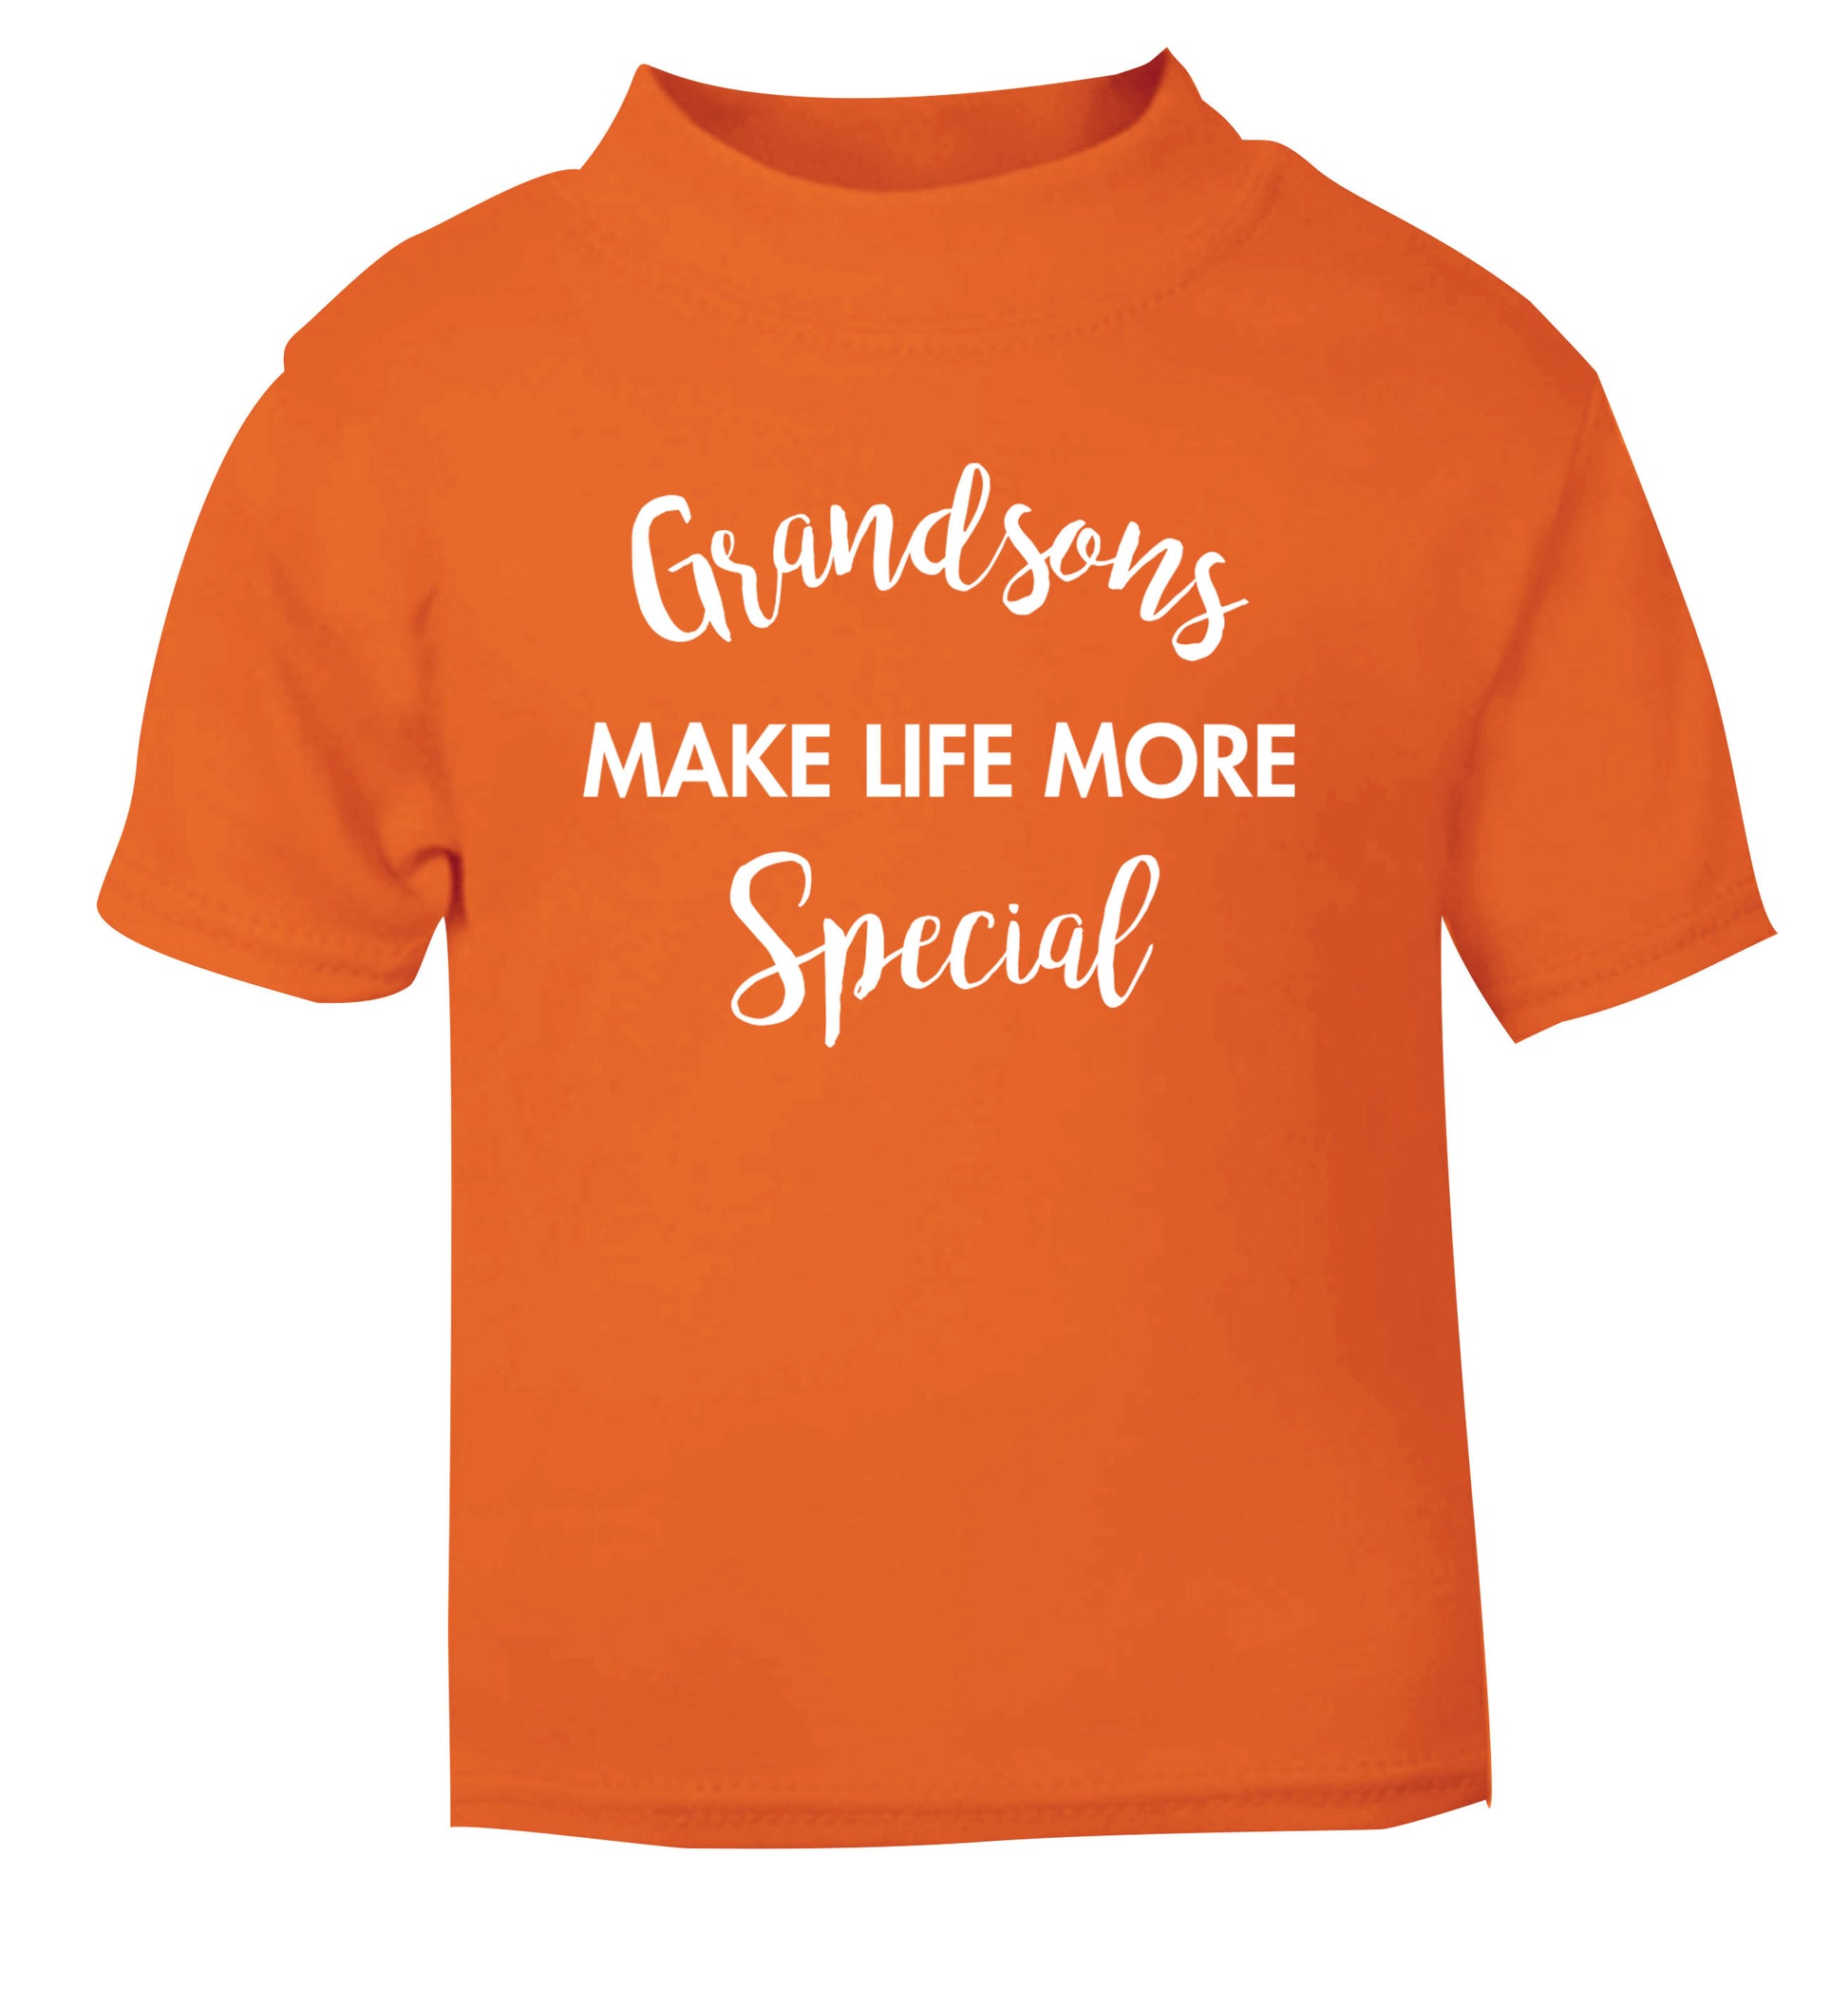 Grandsons make life more special orange Baby Toddler Tshirt 2 Years